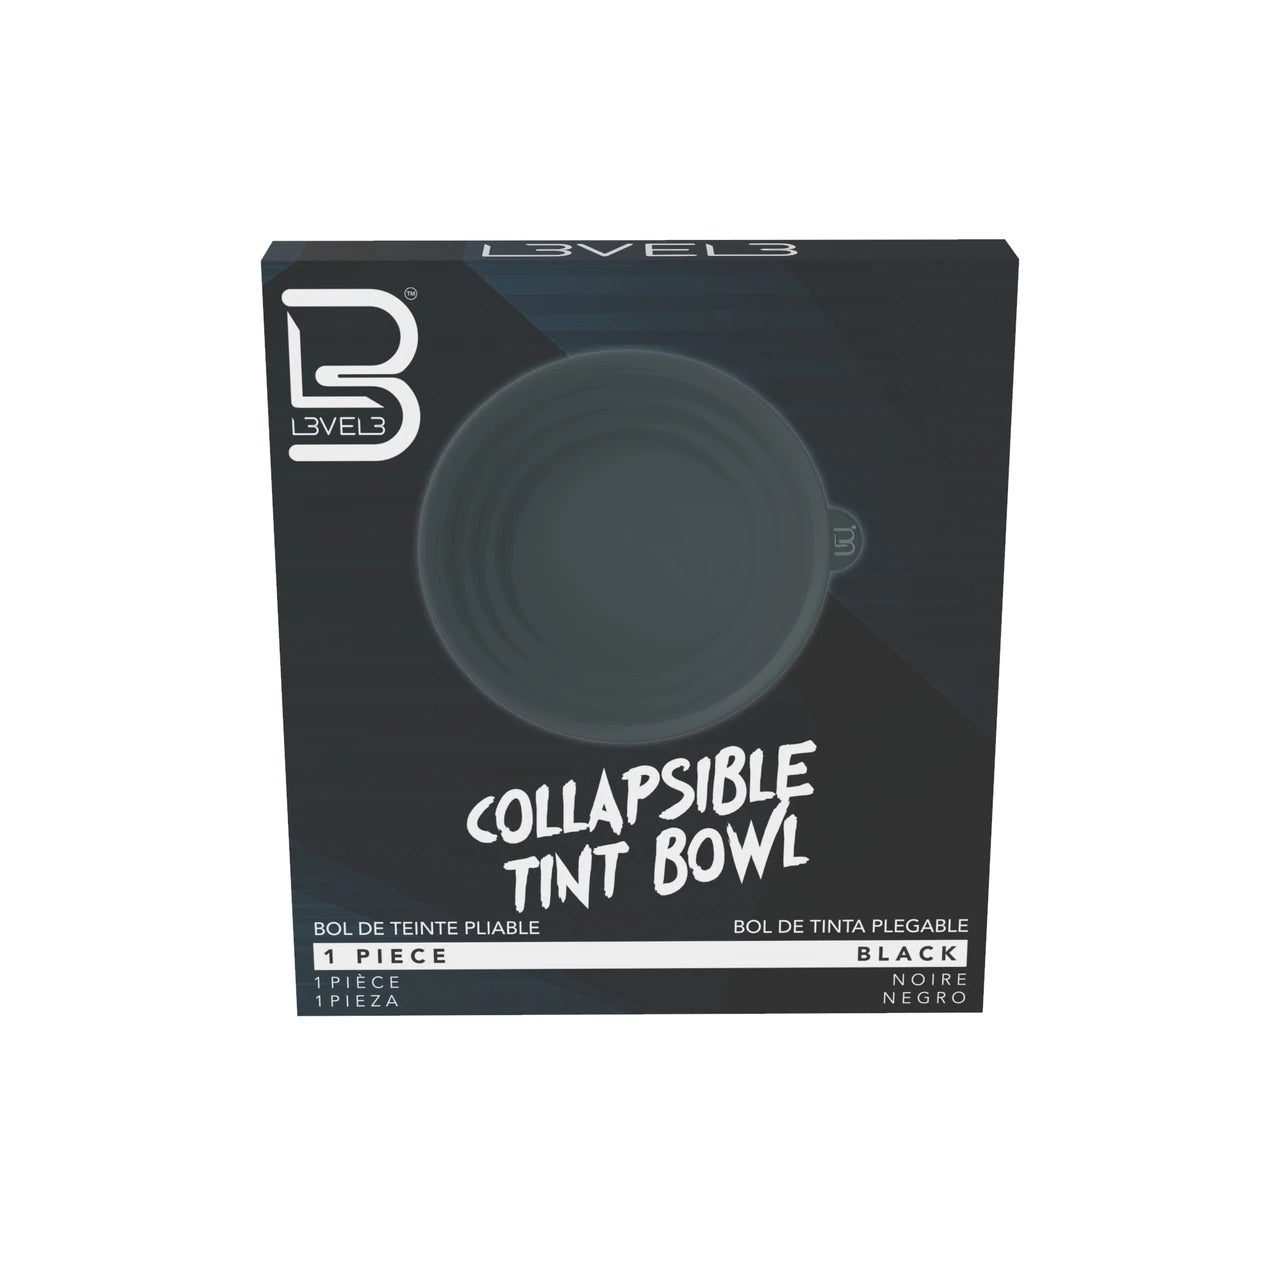 L3VEL3? Collapsible Tint Bowl - Black